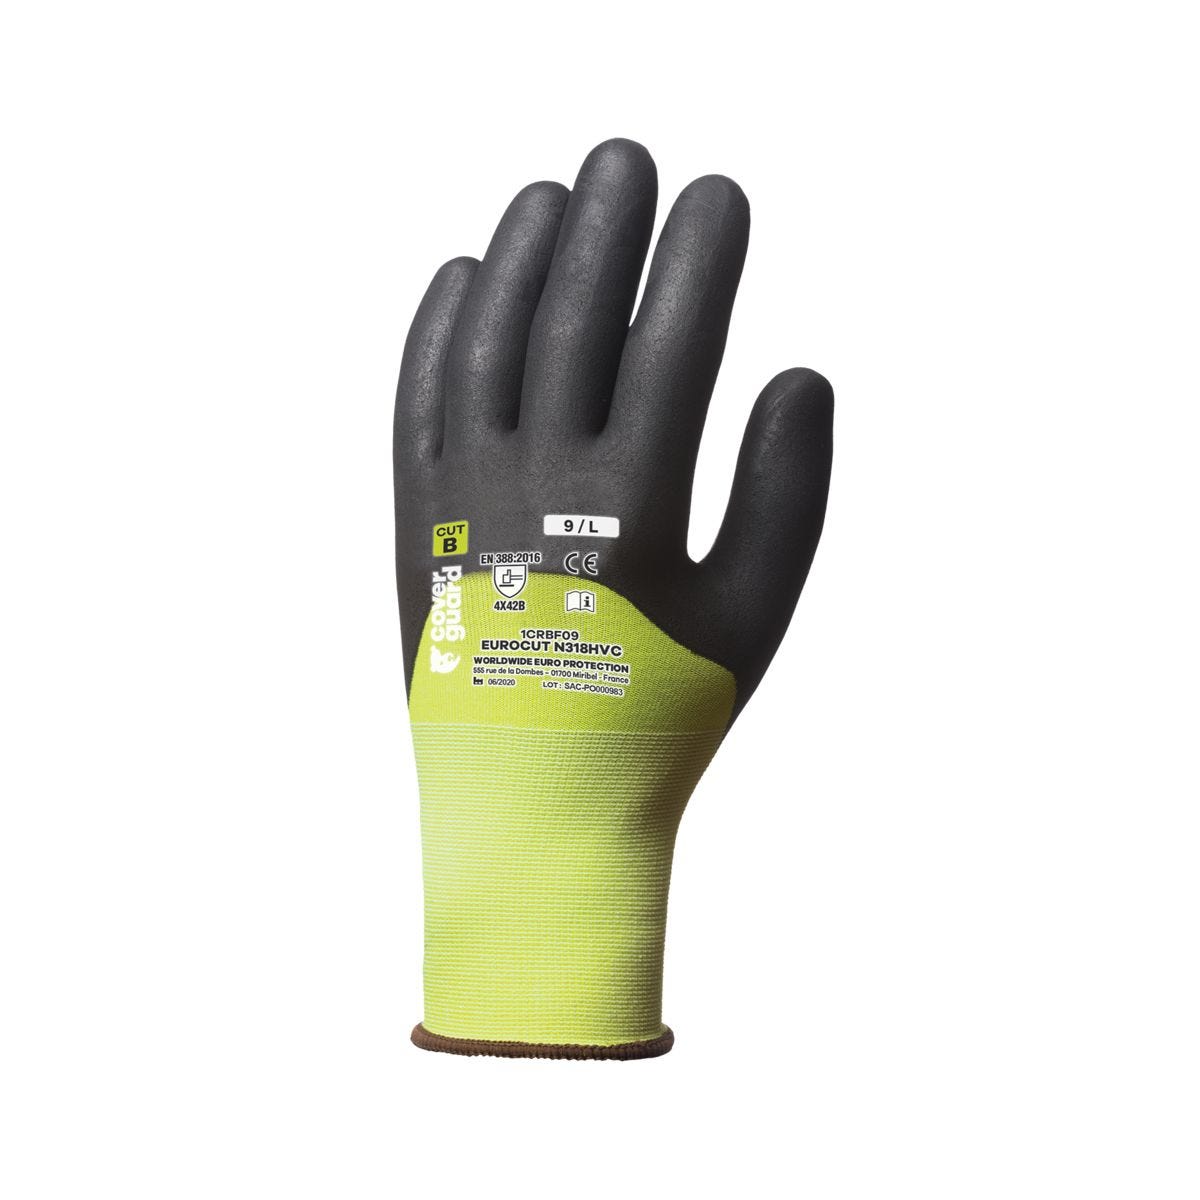 Lot de 5 gants EUROCUT N318HVC HPPE cut B 18G jaune 3/4 end.nitr. - COVERGUARD - Taille XS-6 0